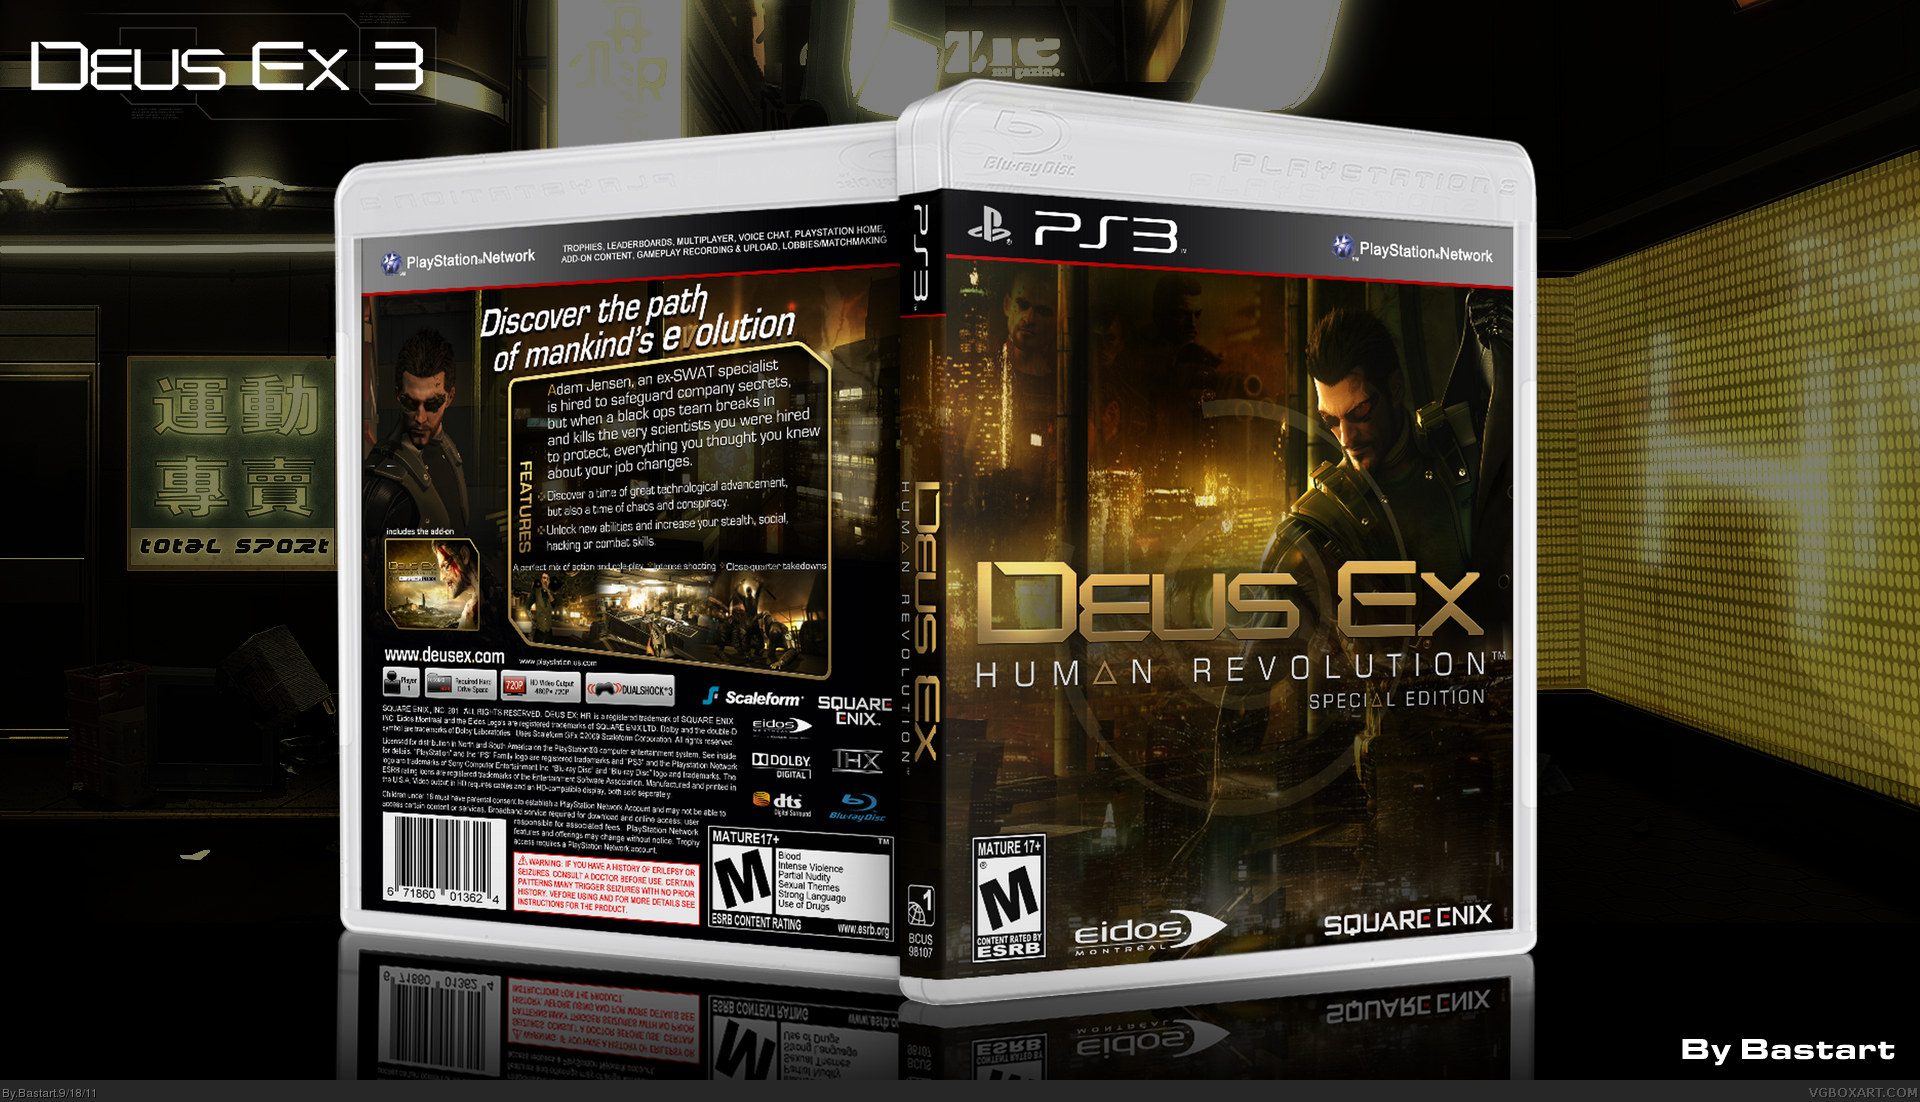 Deus Ex: Human Revolution (Special Edition) box cover